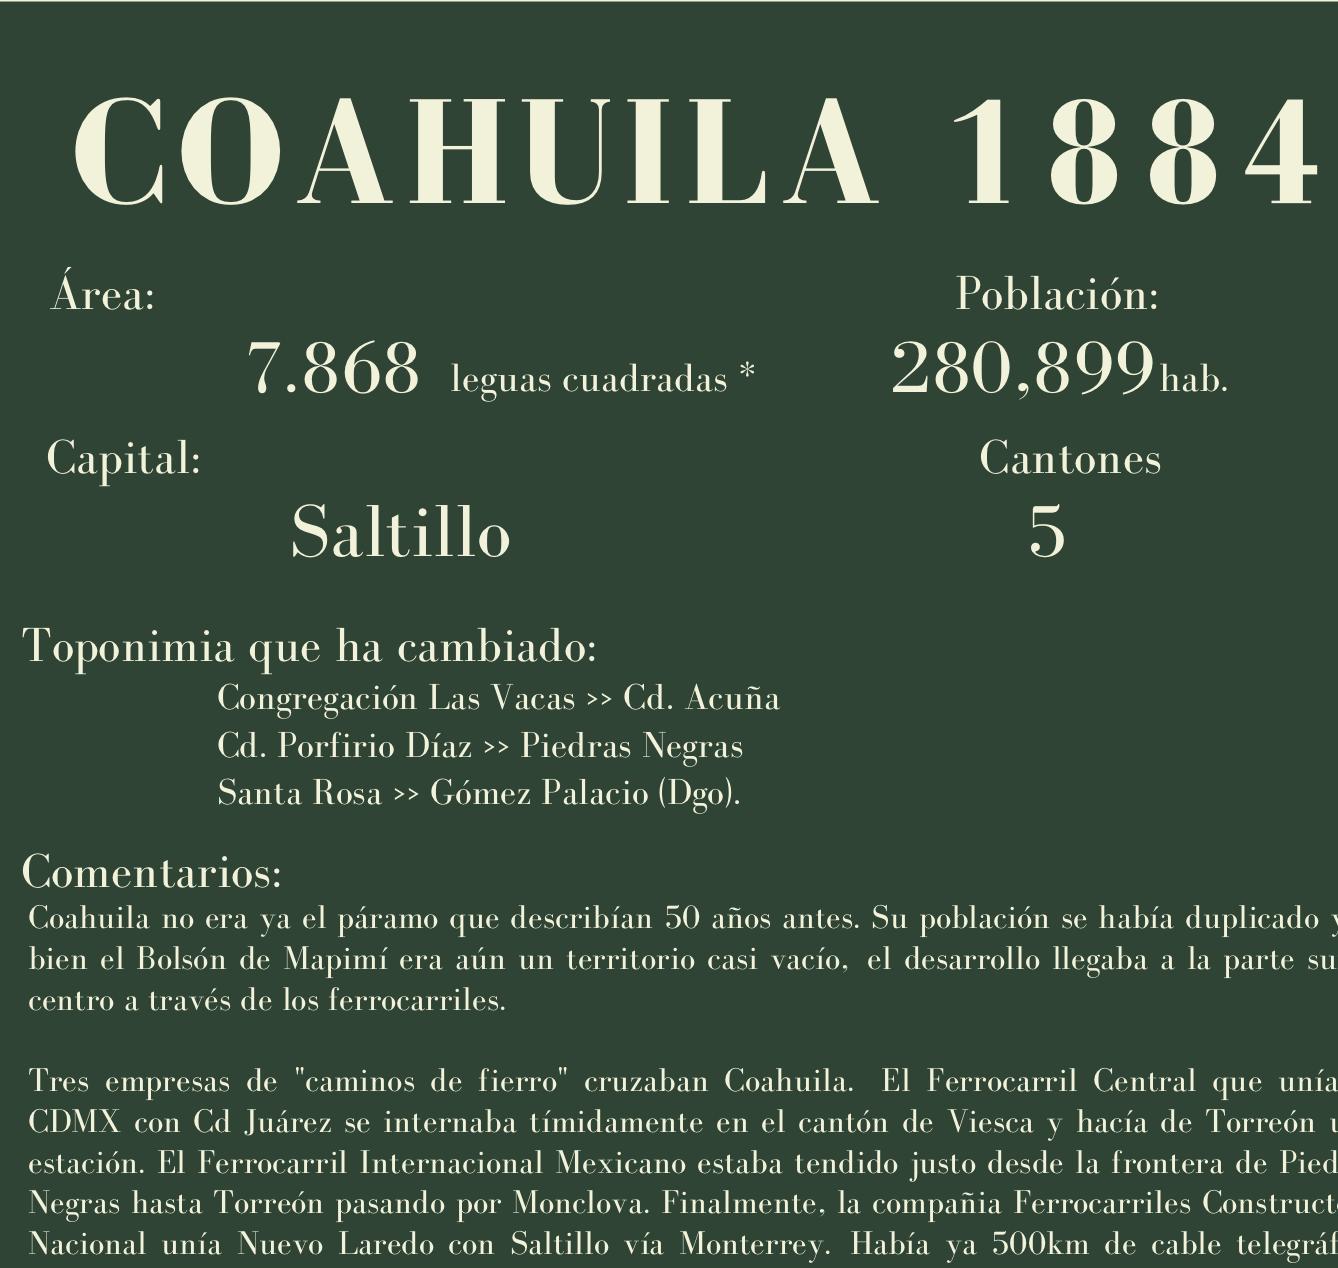 Coahuila 1884